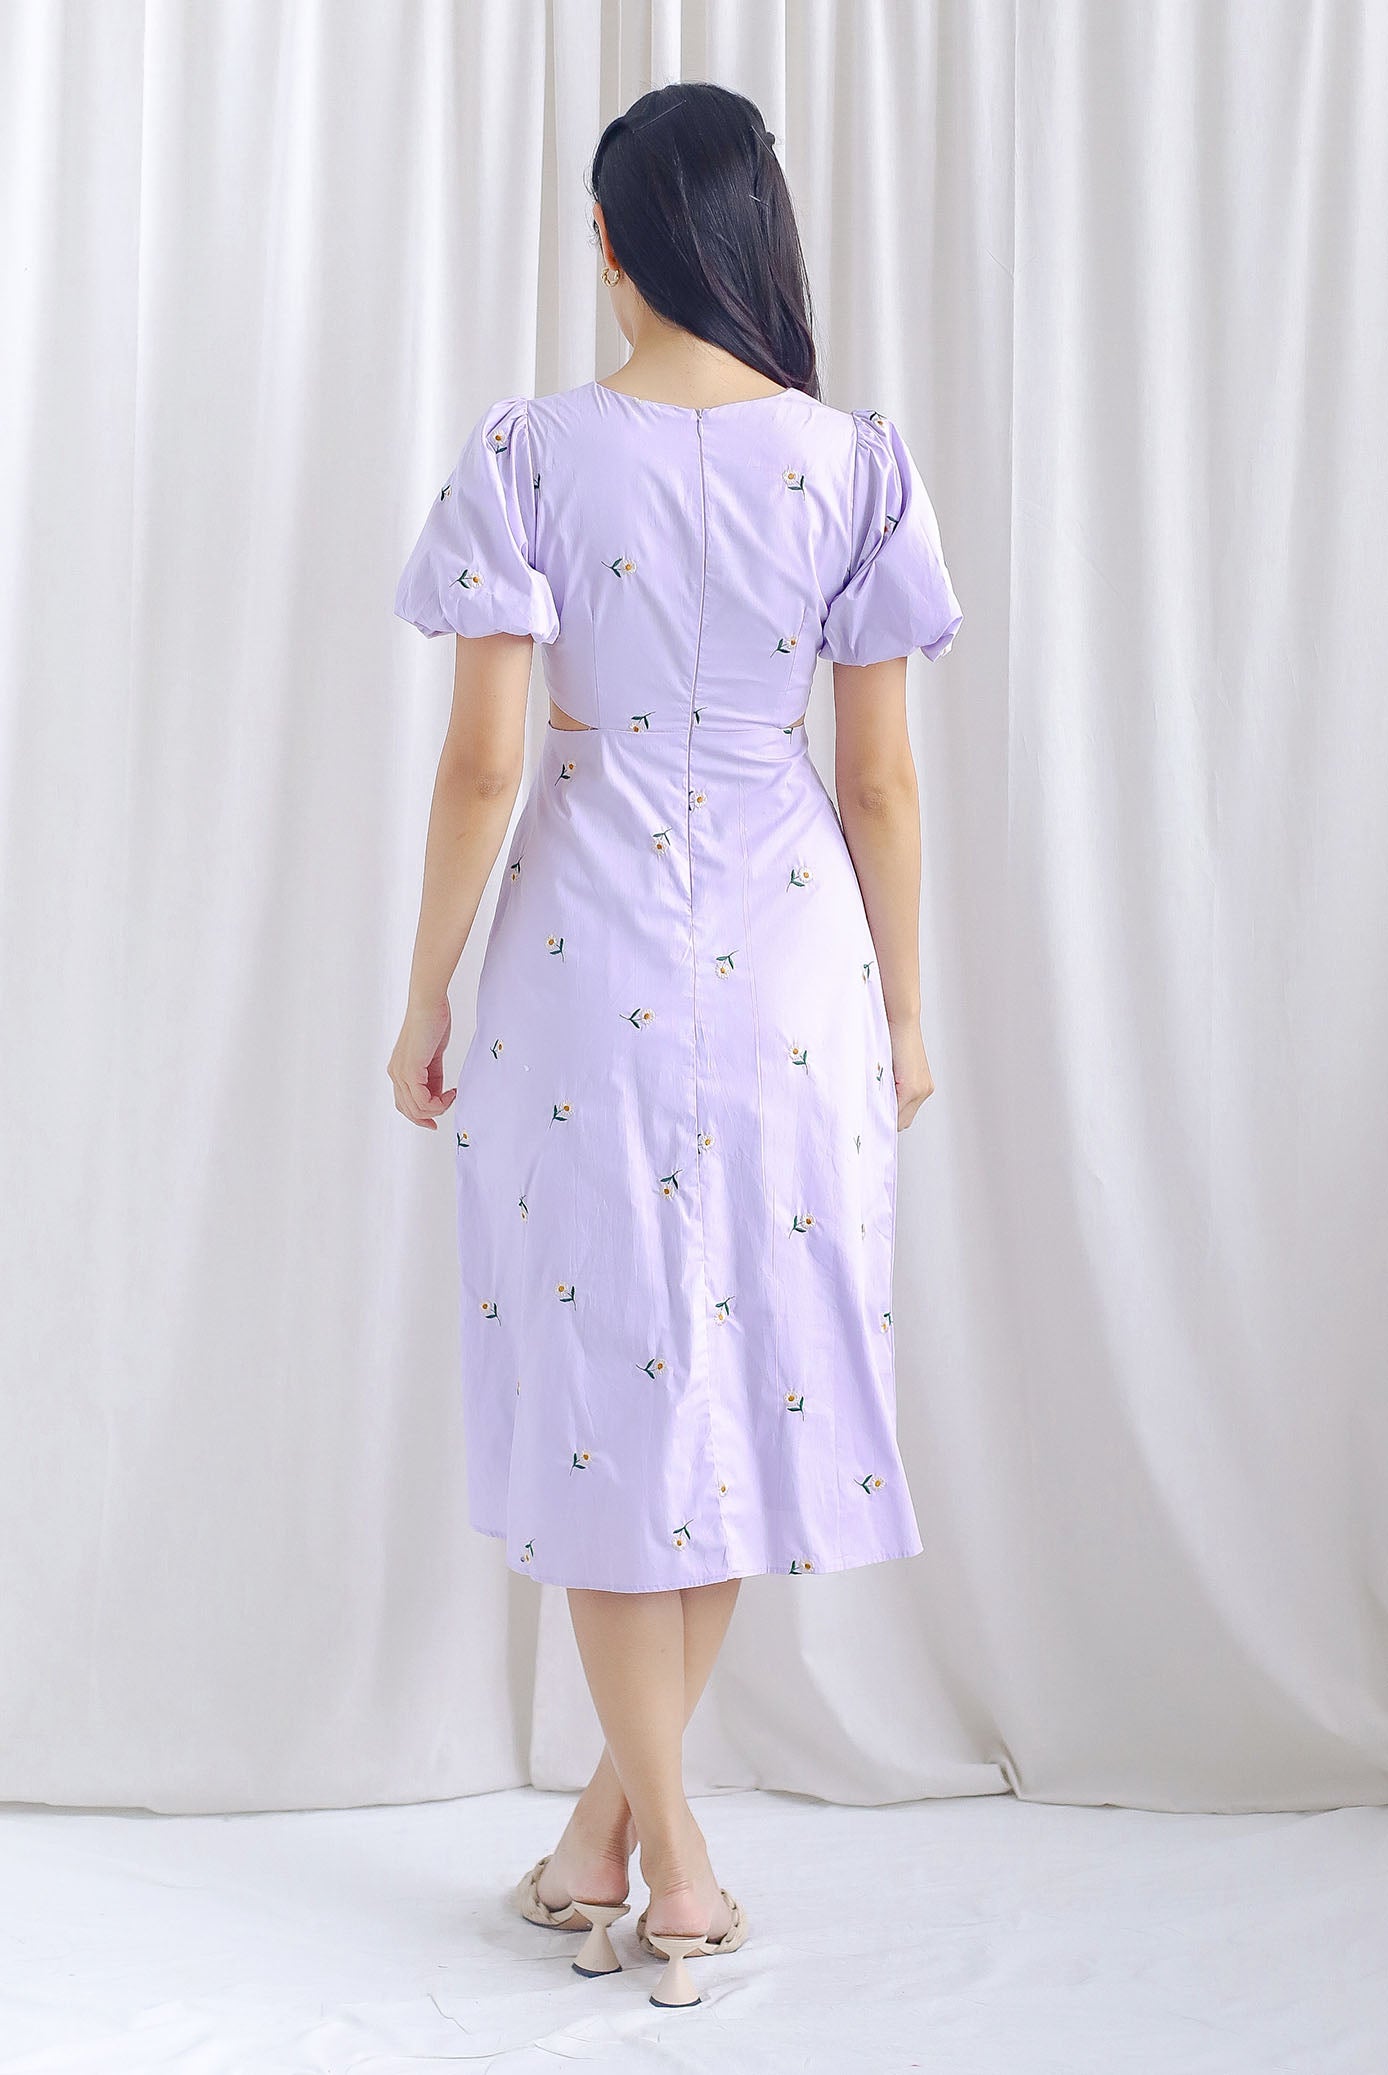 Birkley Loop Cut Out Embro Maxi Dress In Lilac